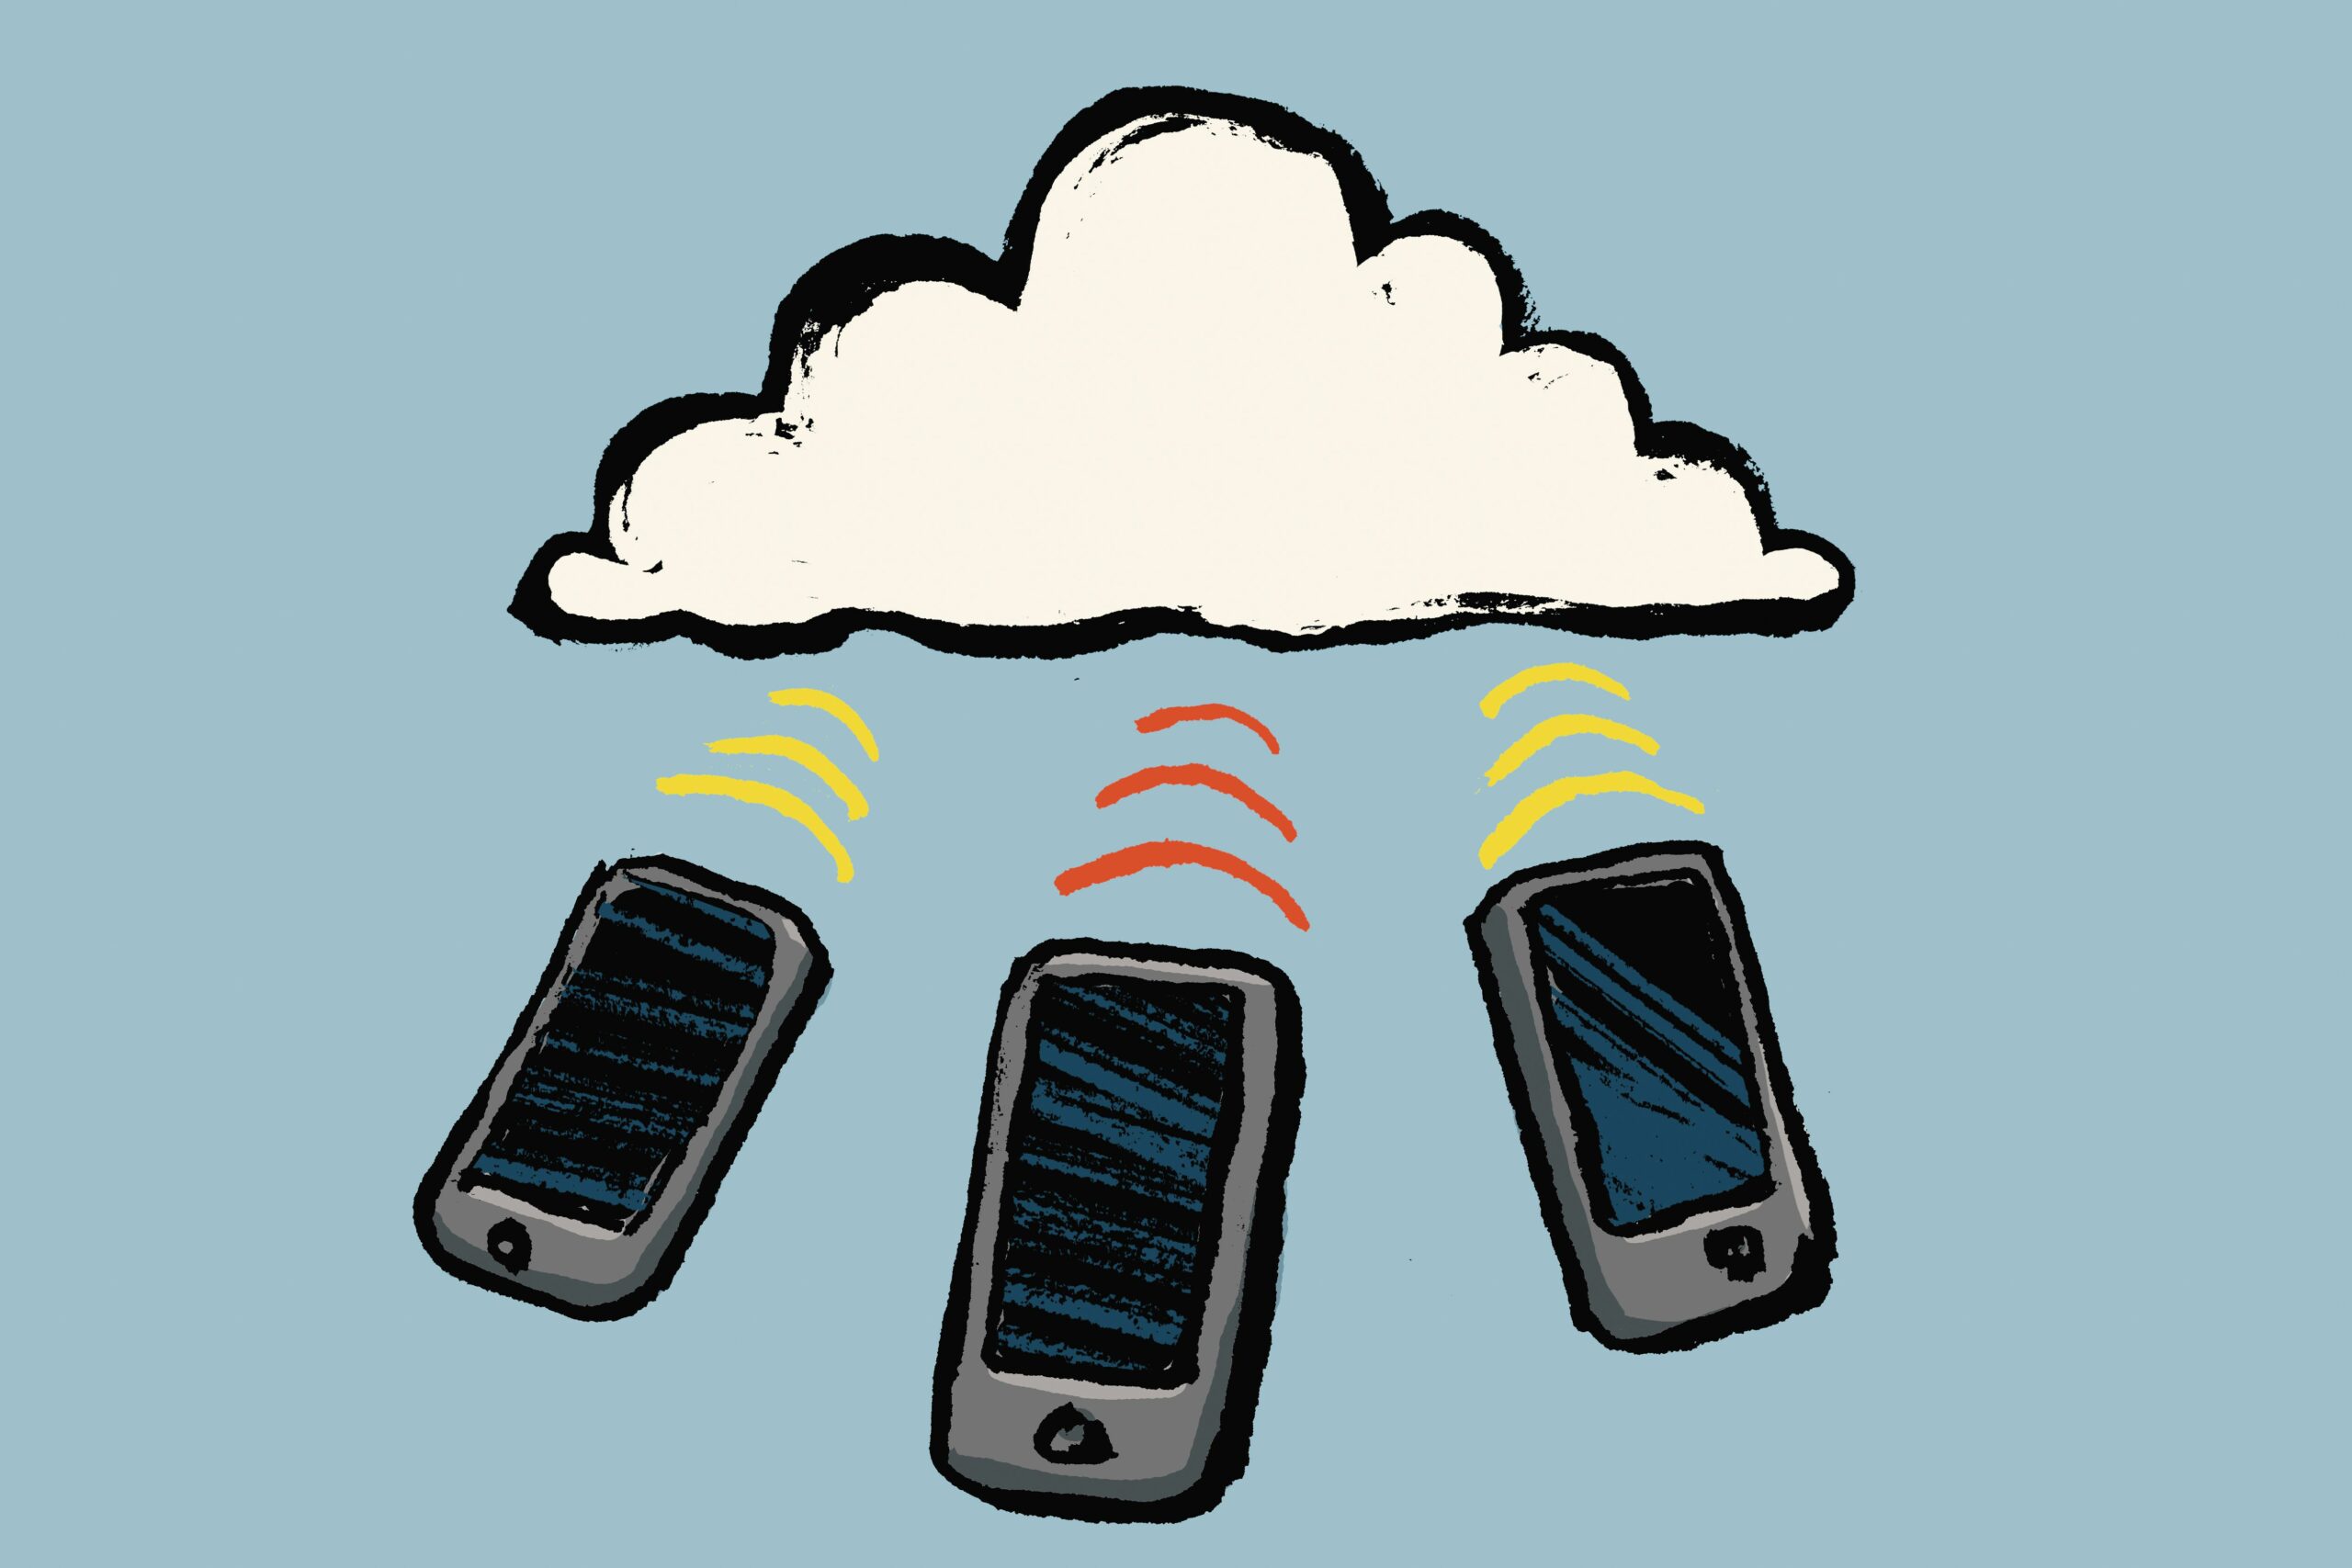 illustration of smart phones and cloud against blue background 594832411 5af5f86f6bf0690036a7969e scaled